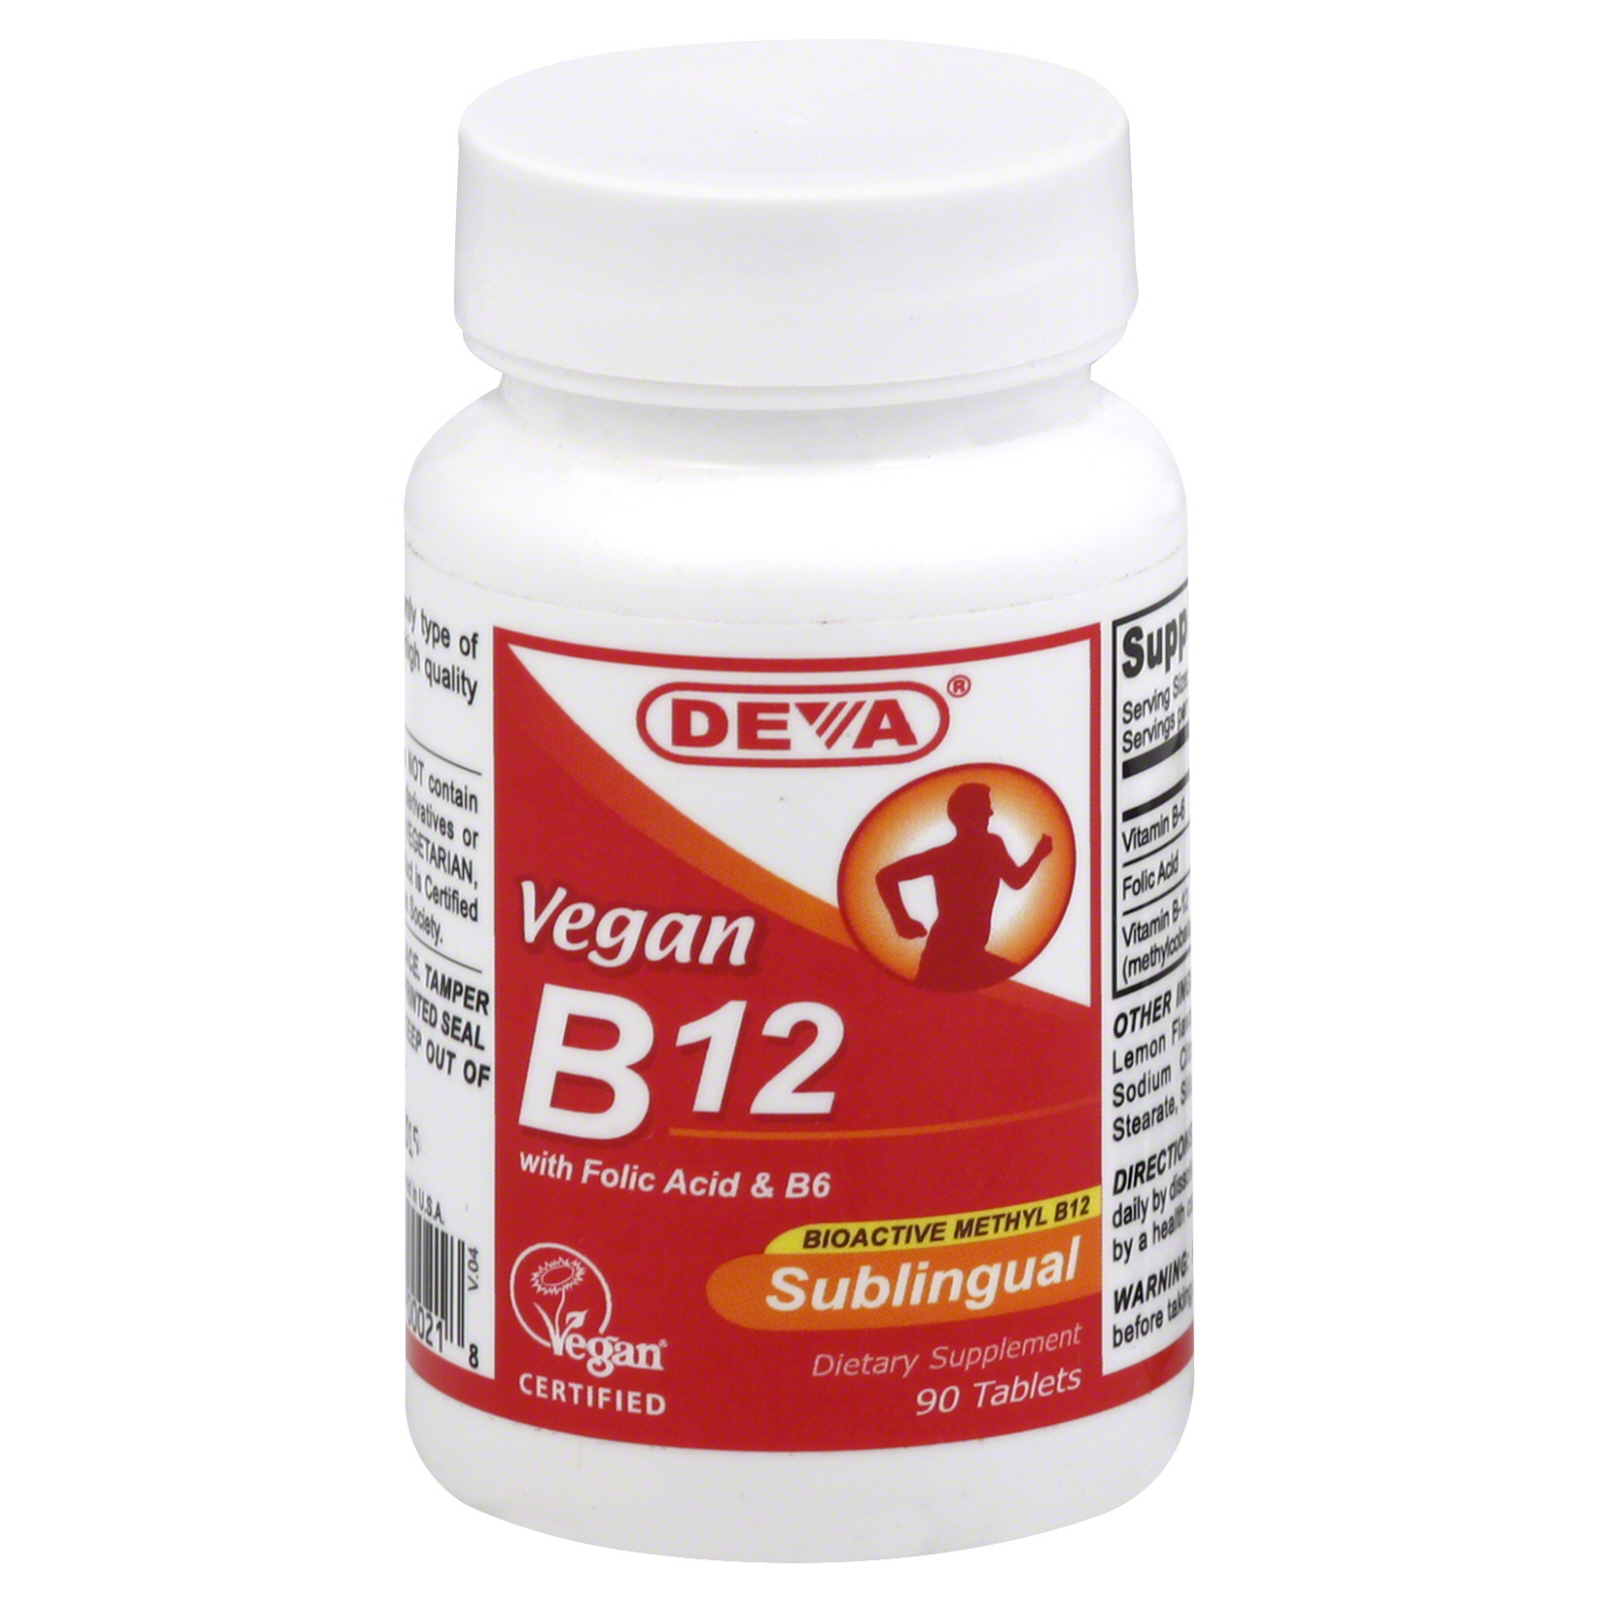 B12, with Folic Acid & B6, Sublingual, Tablets, 90 tablets